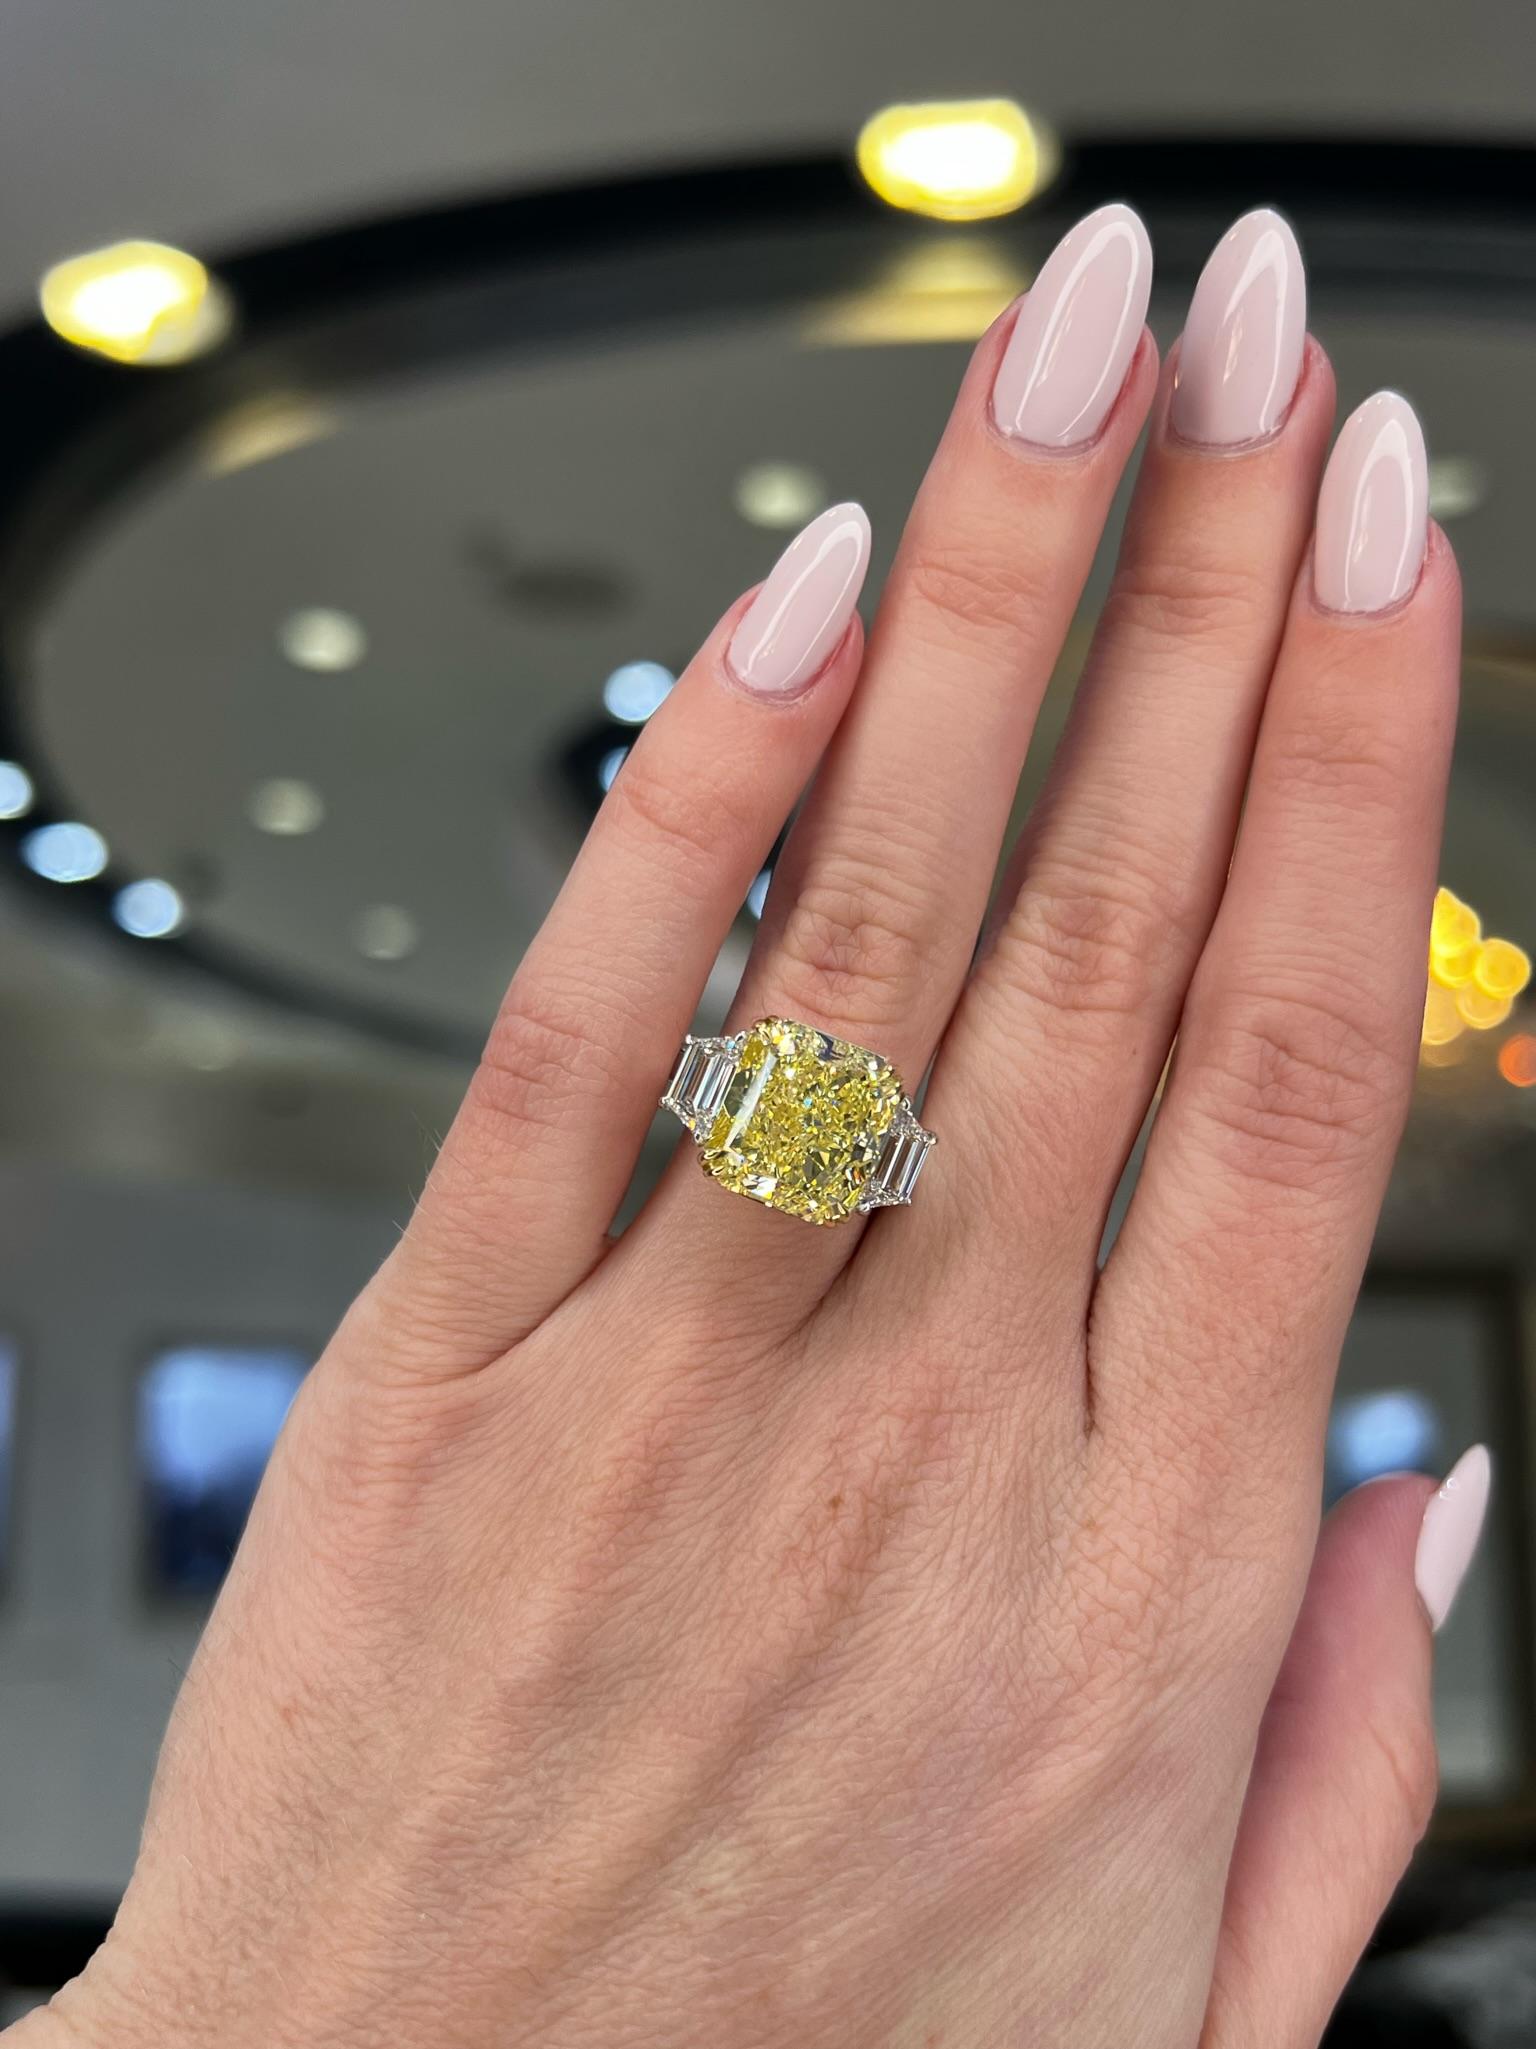 David Rosenberg 7.81 Carat Radiant Fancy Yellow VS1 GIA Diamond Engagement Ring For Sale 8